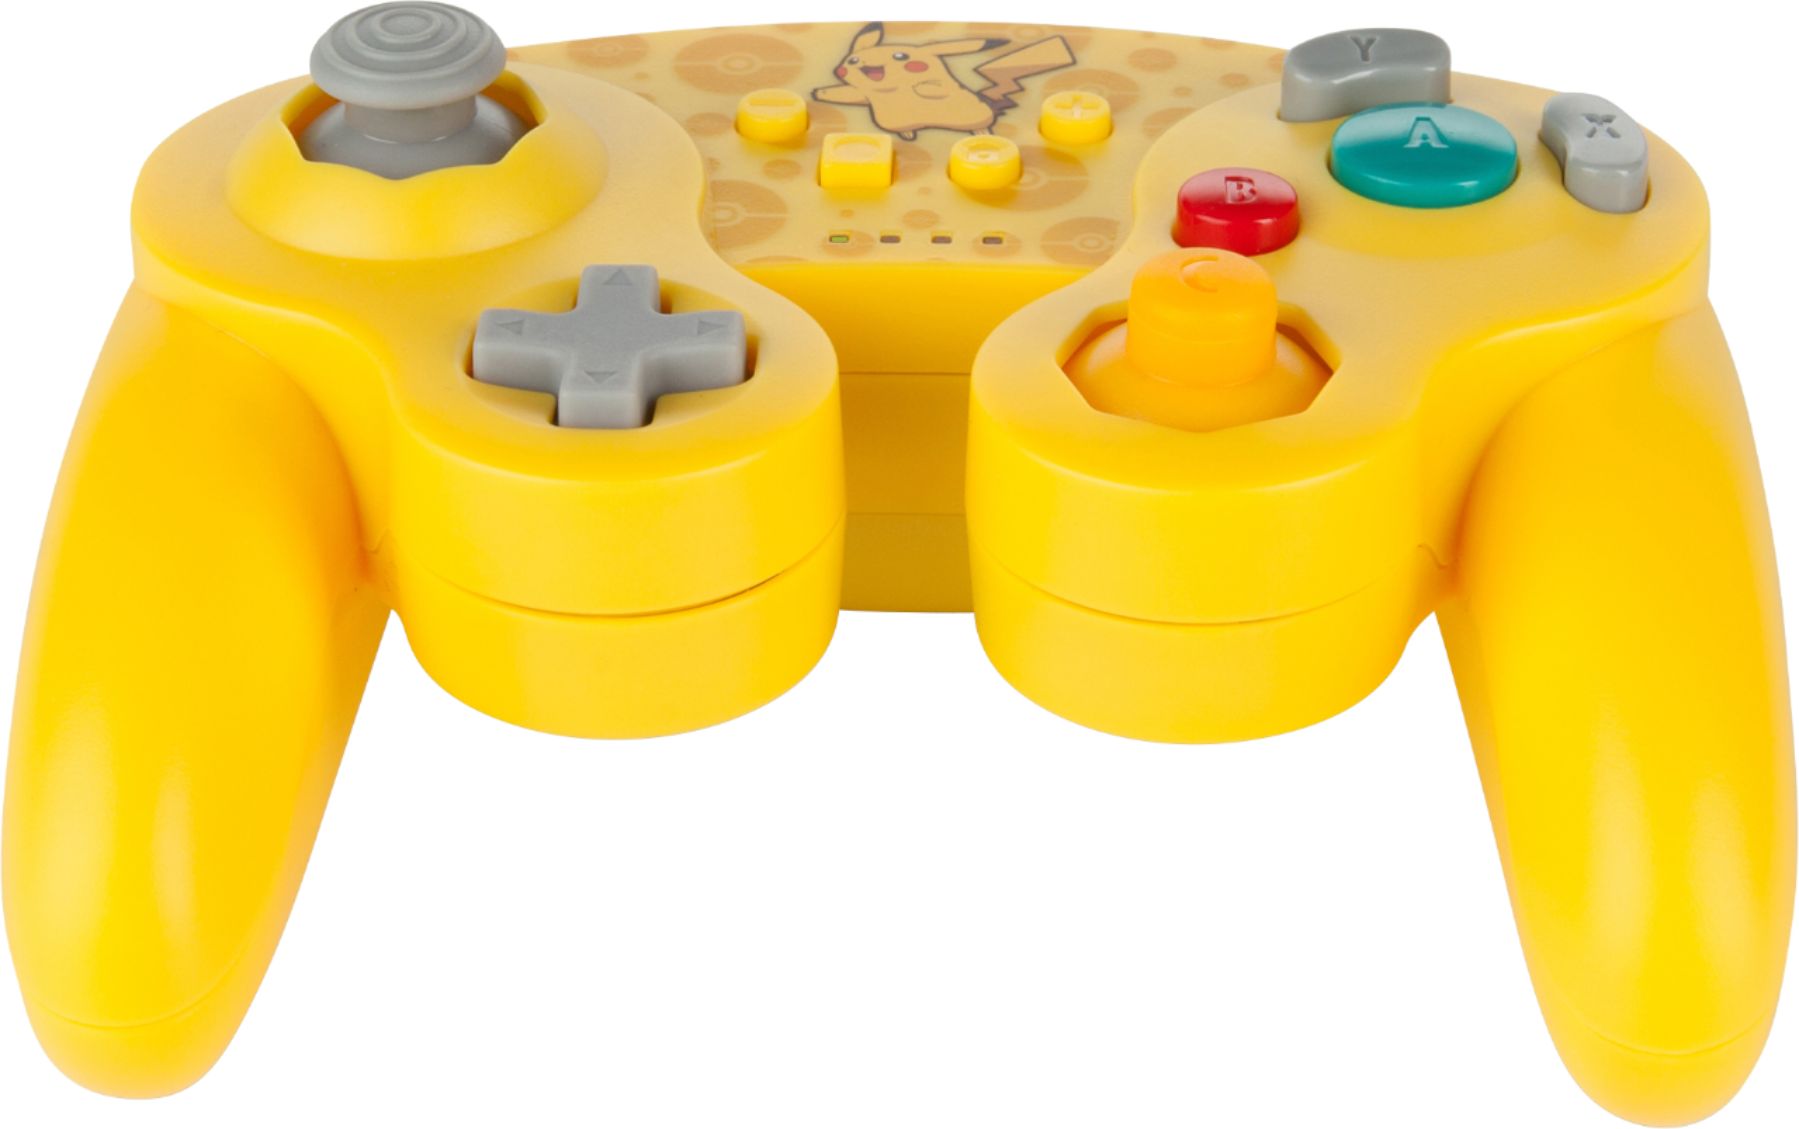 pikachu wireless gamecube controller